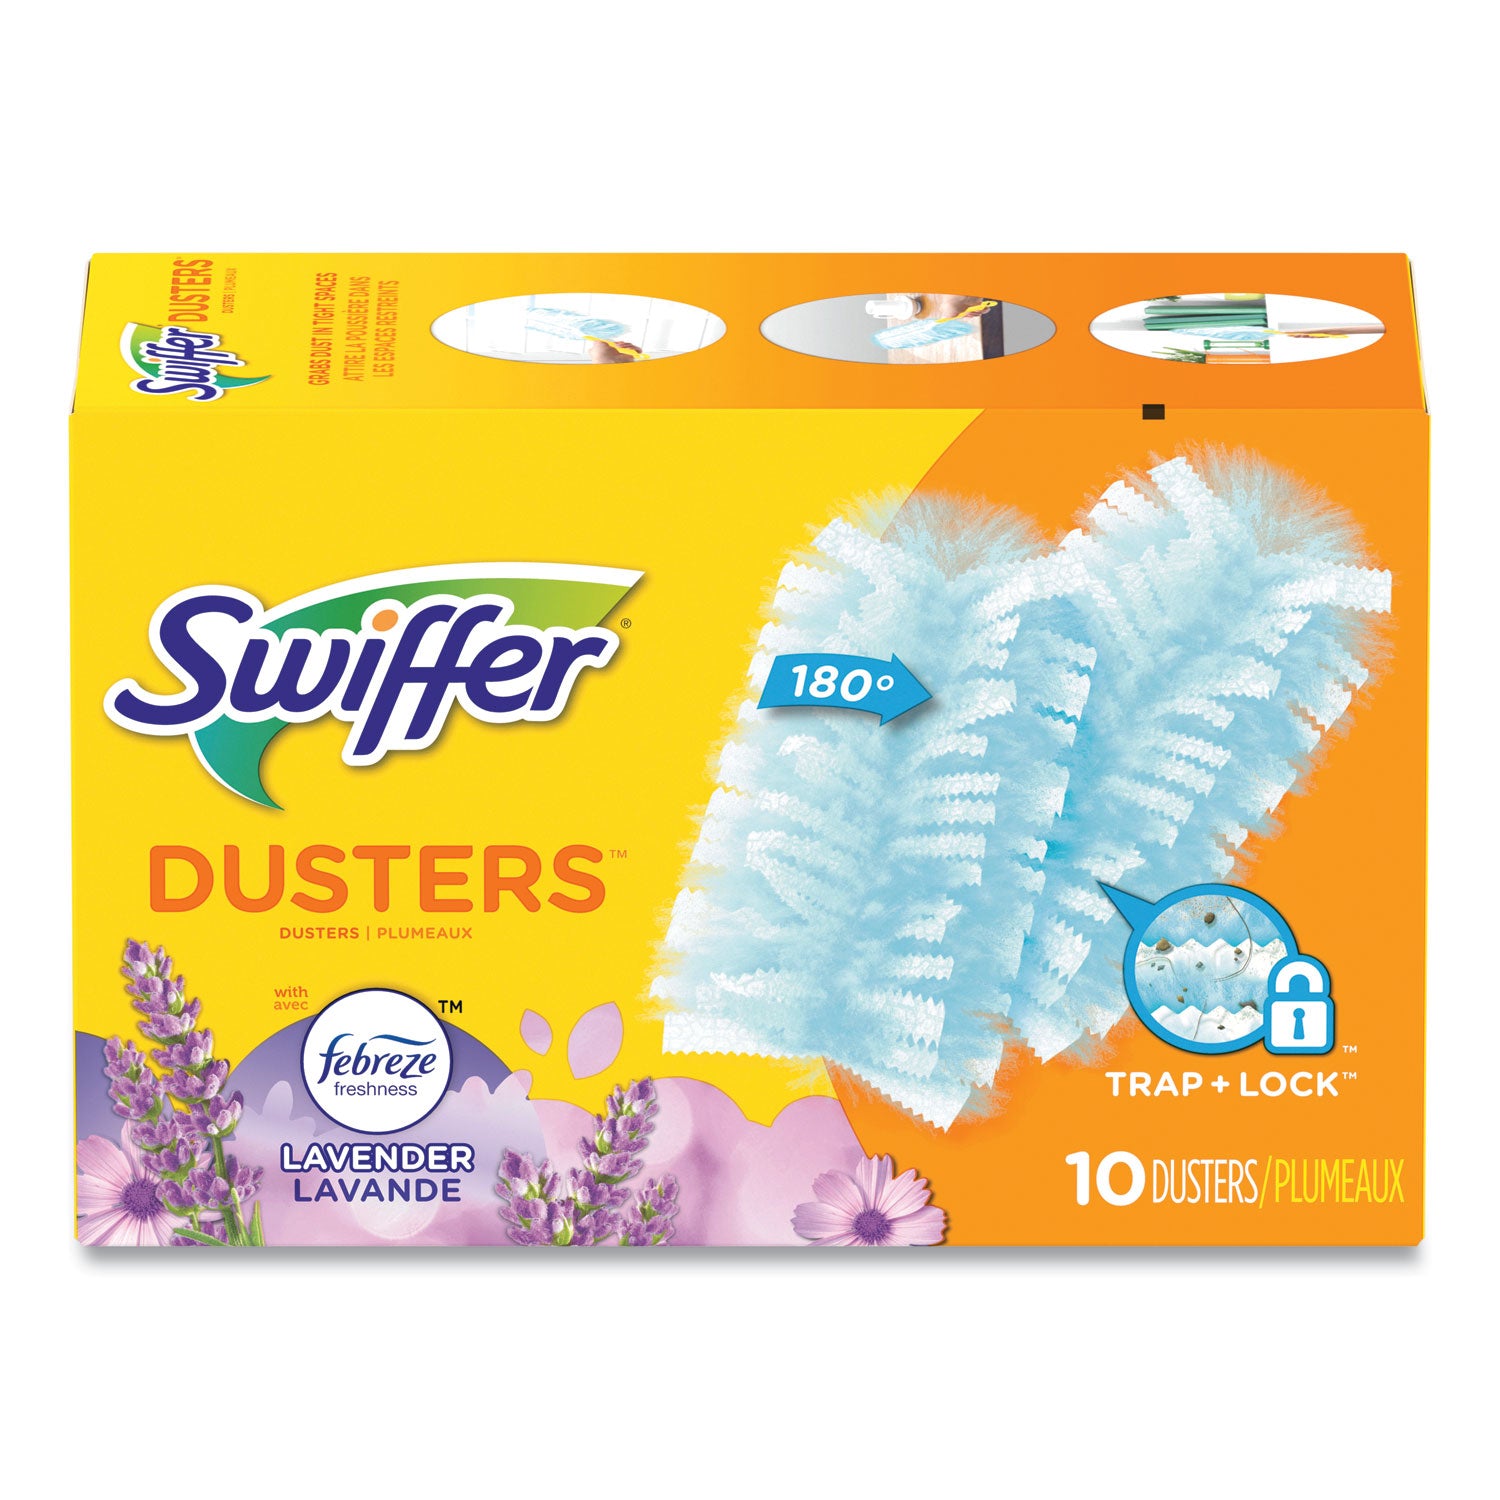 refill-dusters-dustlock-fiber-light-blue-lavender-vanilla-scent10-box4-boxes-carton_pgc21461ct - 1